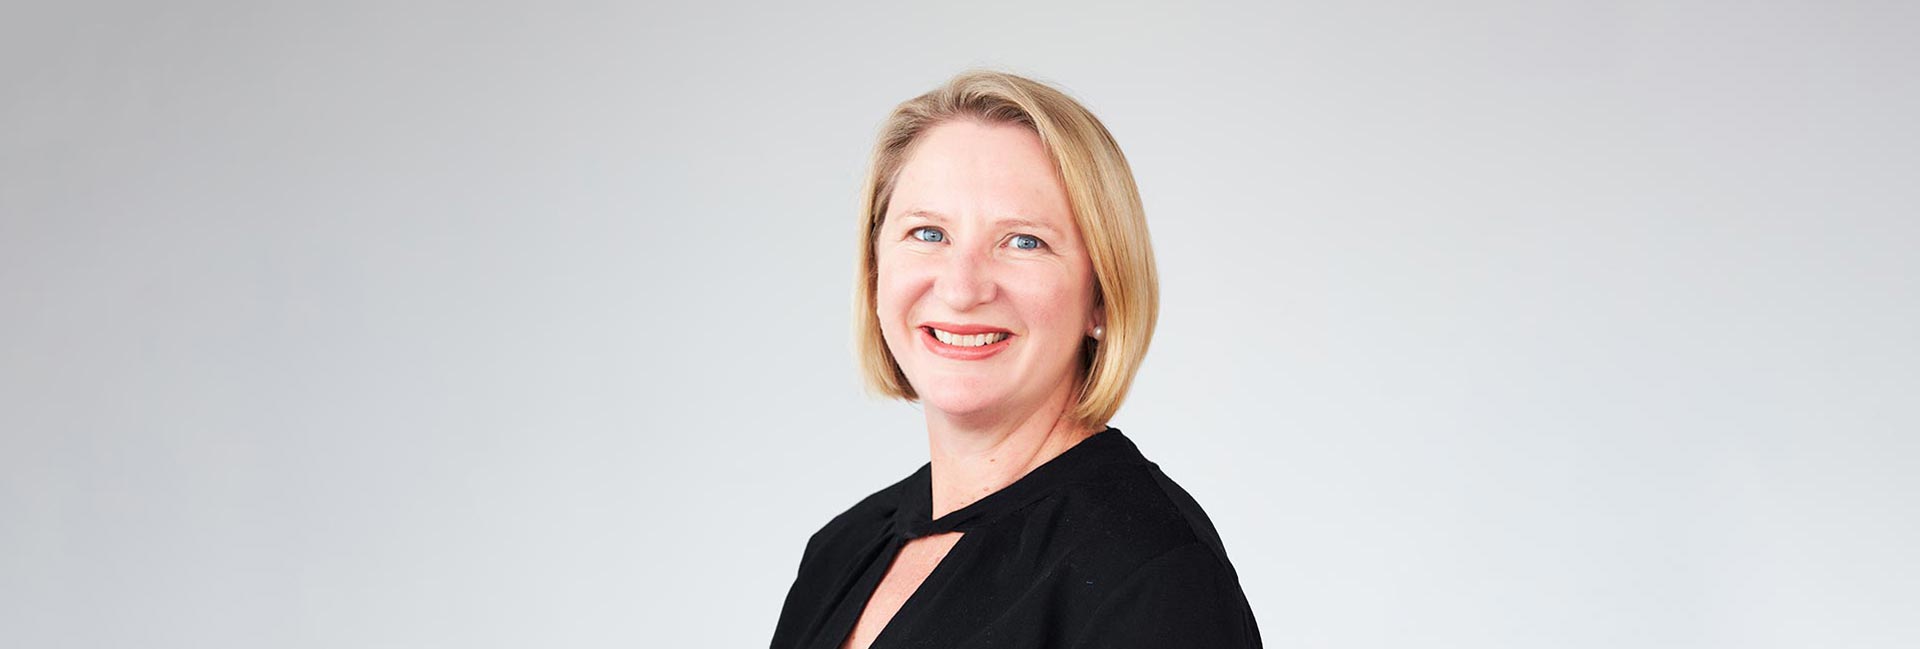 Kate Barnet named chair of ARITA’S Balance Taskforce Committee